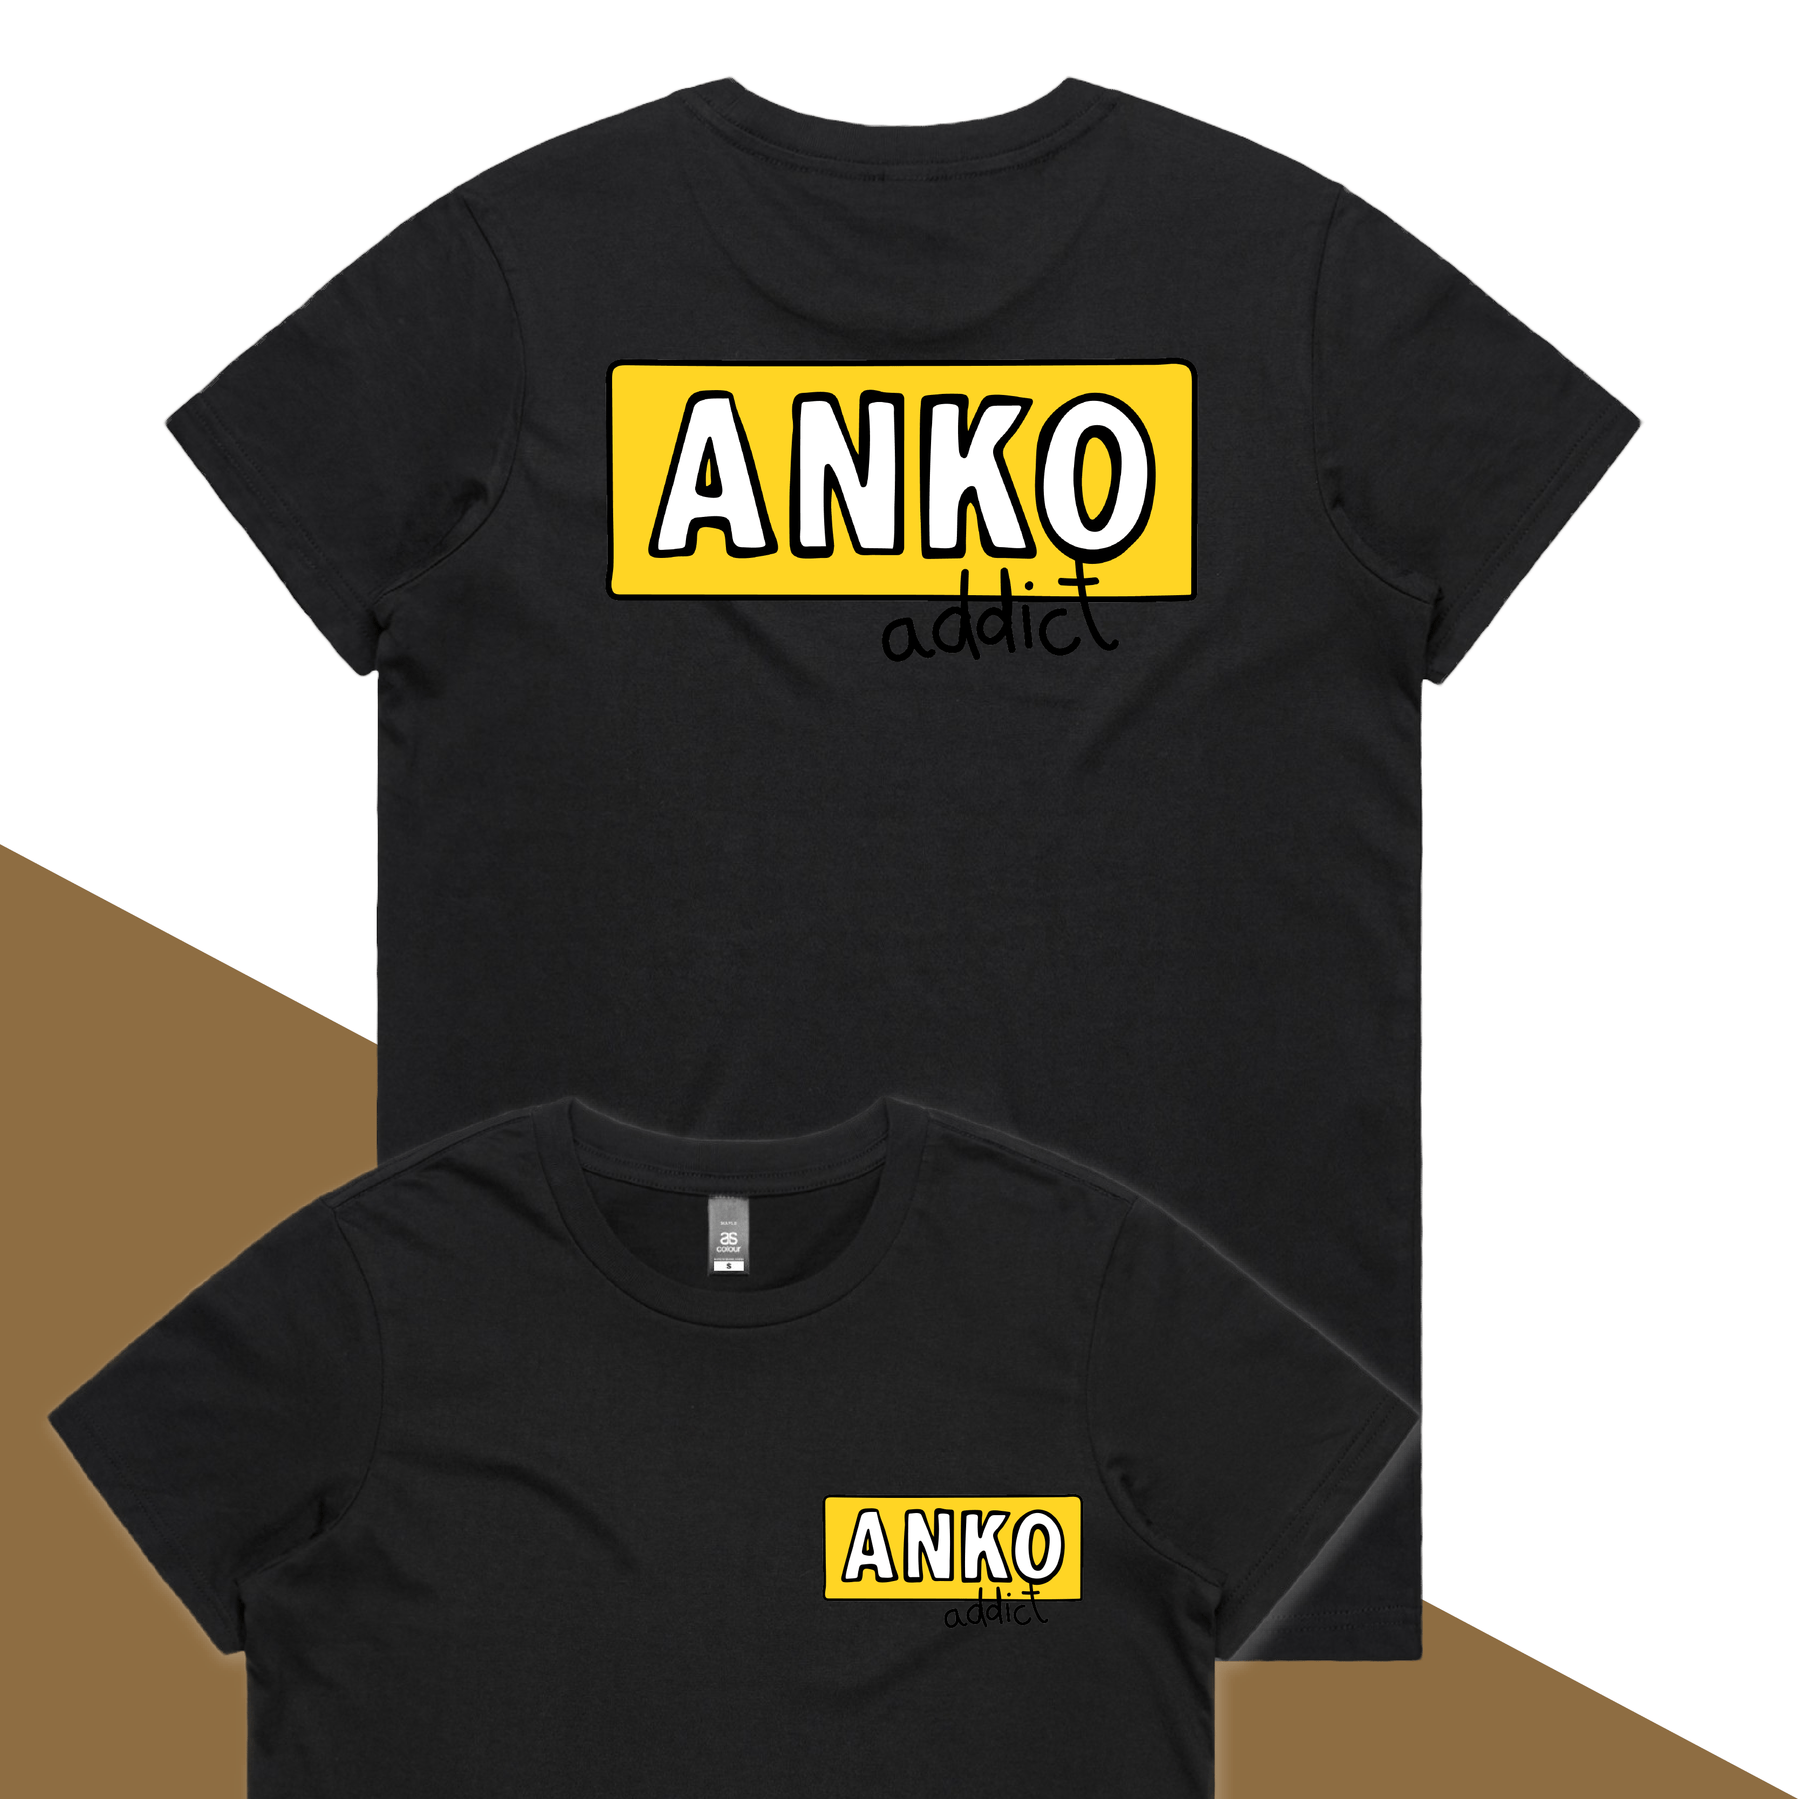 XS / Black / Small Front & Large Back Design ANKO Addict 💉 - Women's T Shirt